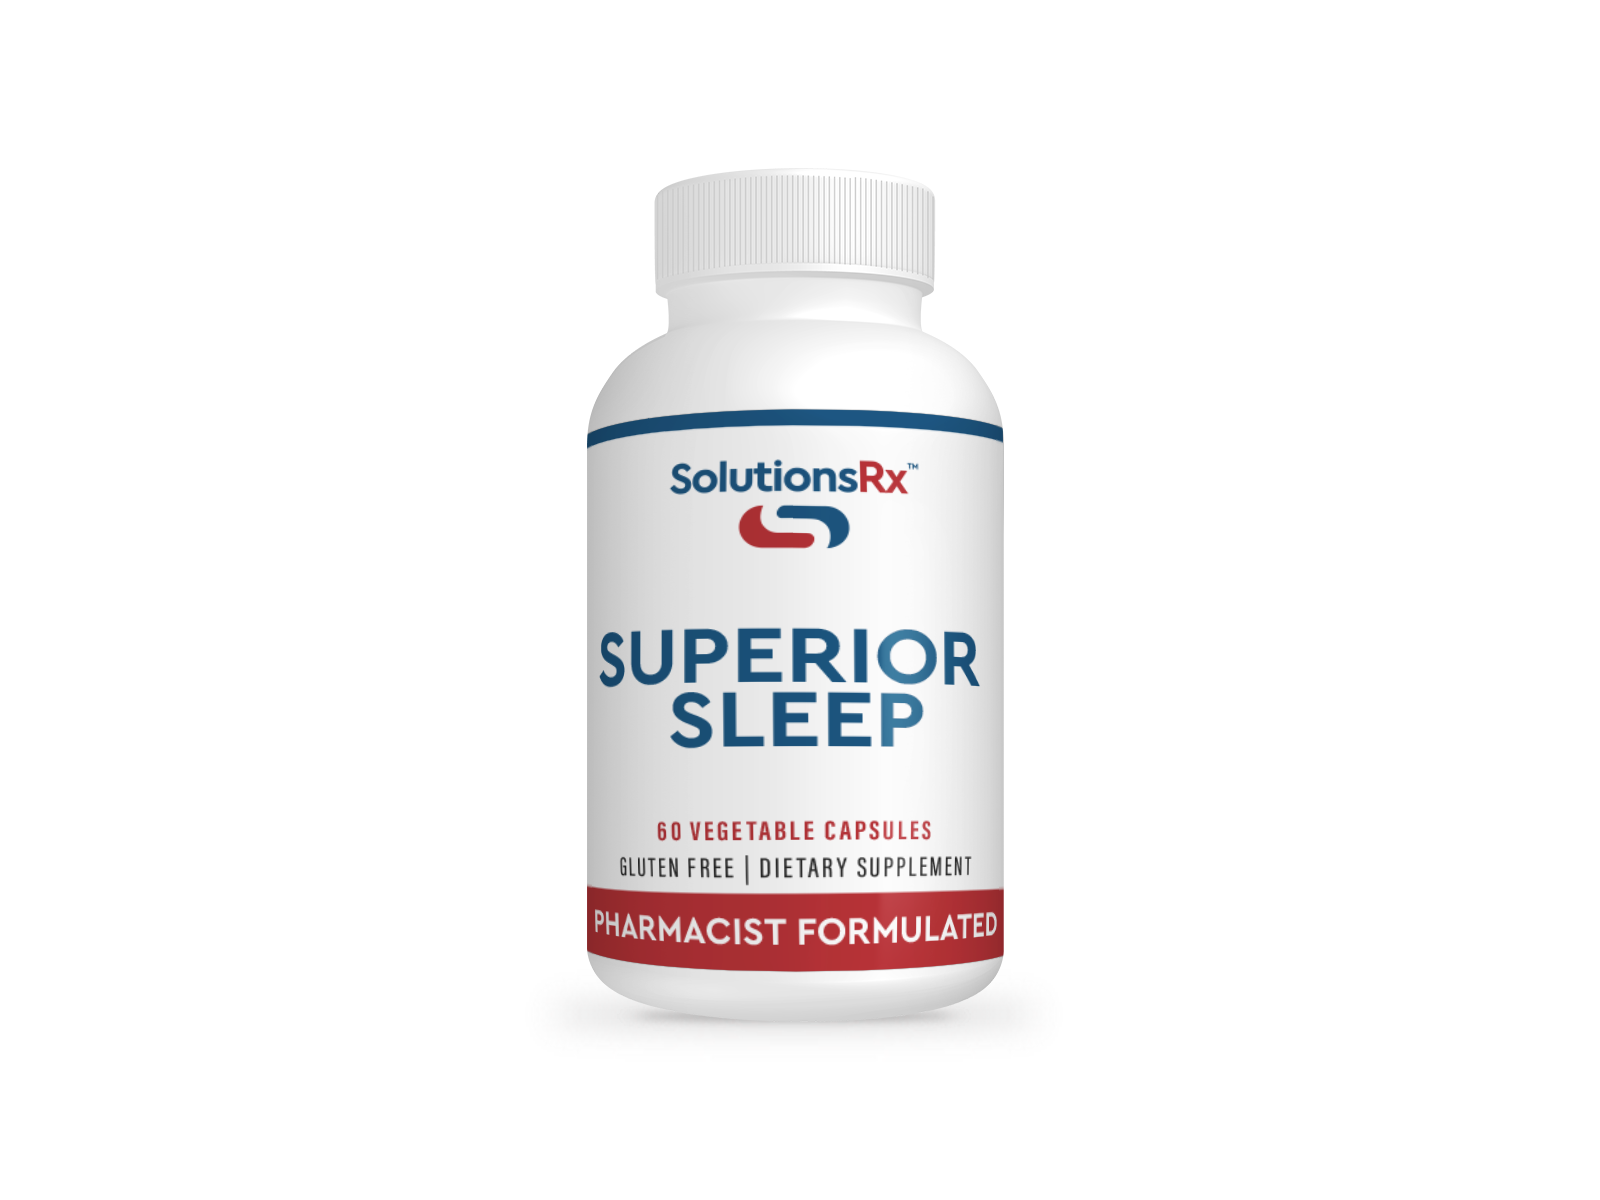 Superior Sleep